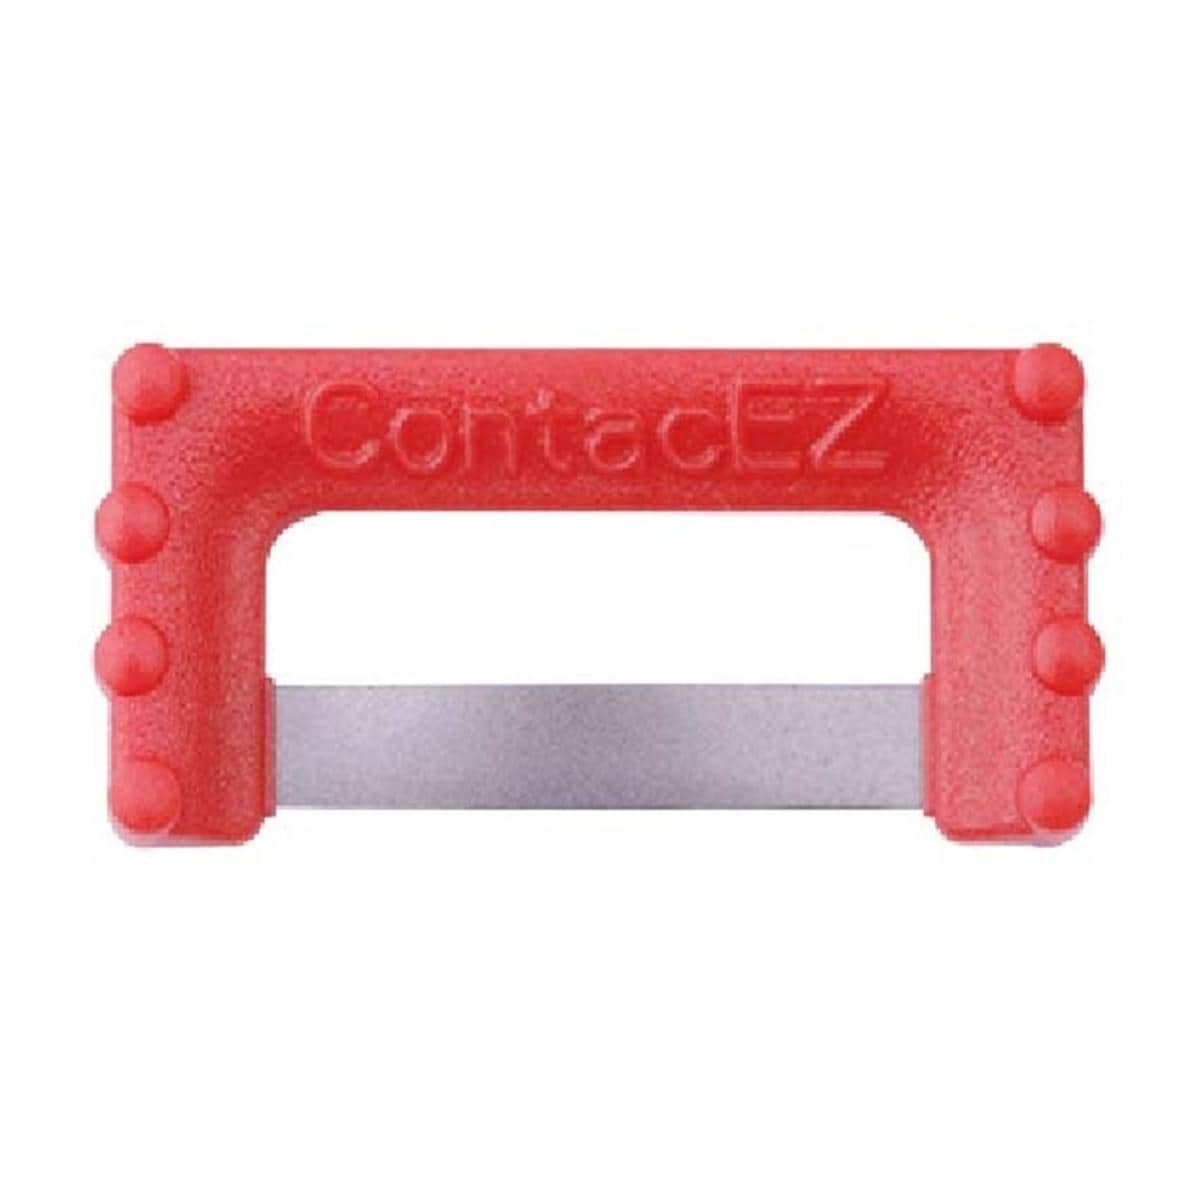 ContacEZ IPR - navulling - REF. 32416 - Rood 0,12mm, 16 stuks